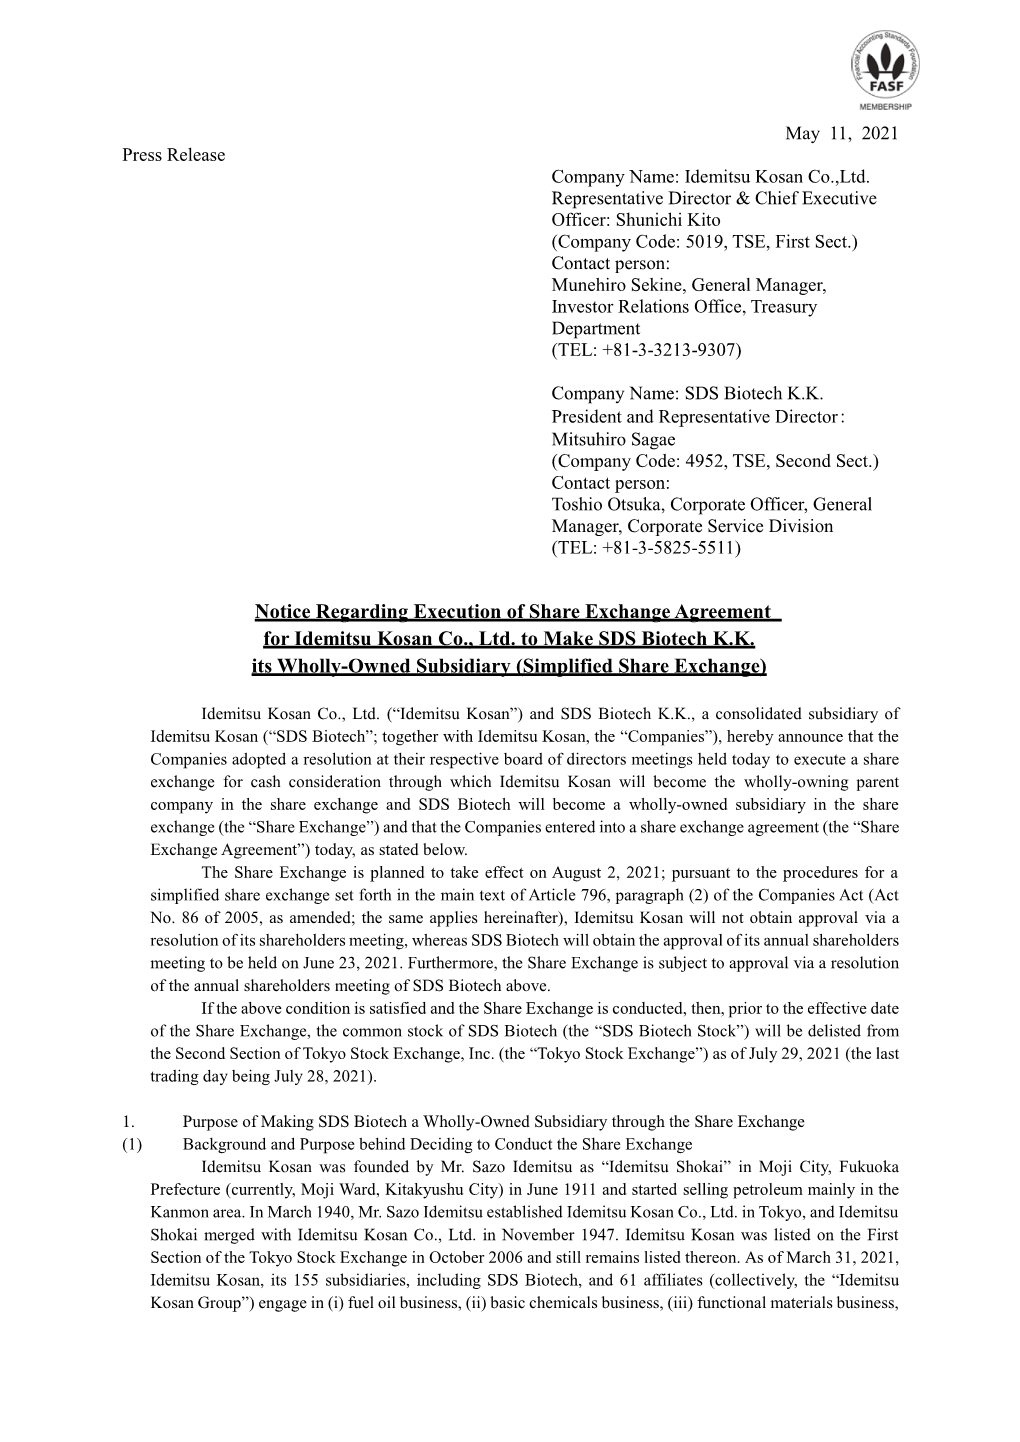 Notice Regarding Execution of Share Exchange Agreement for Idemitsu Kosan Co., Ltd